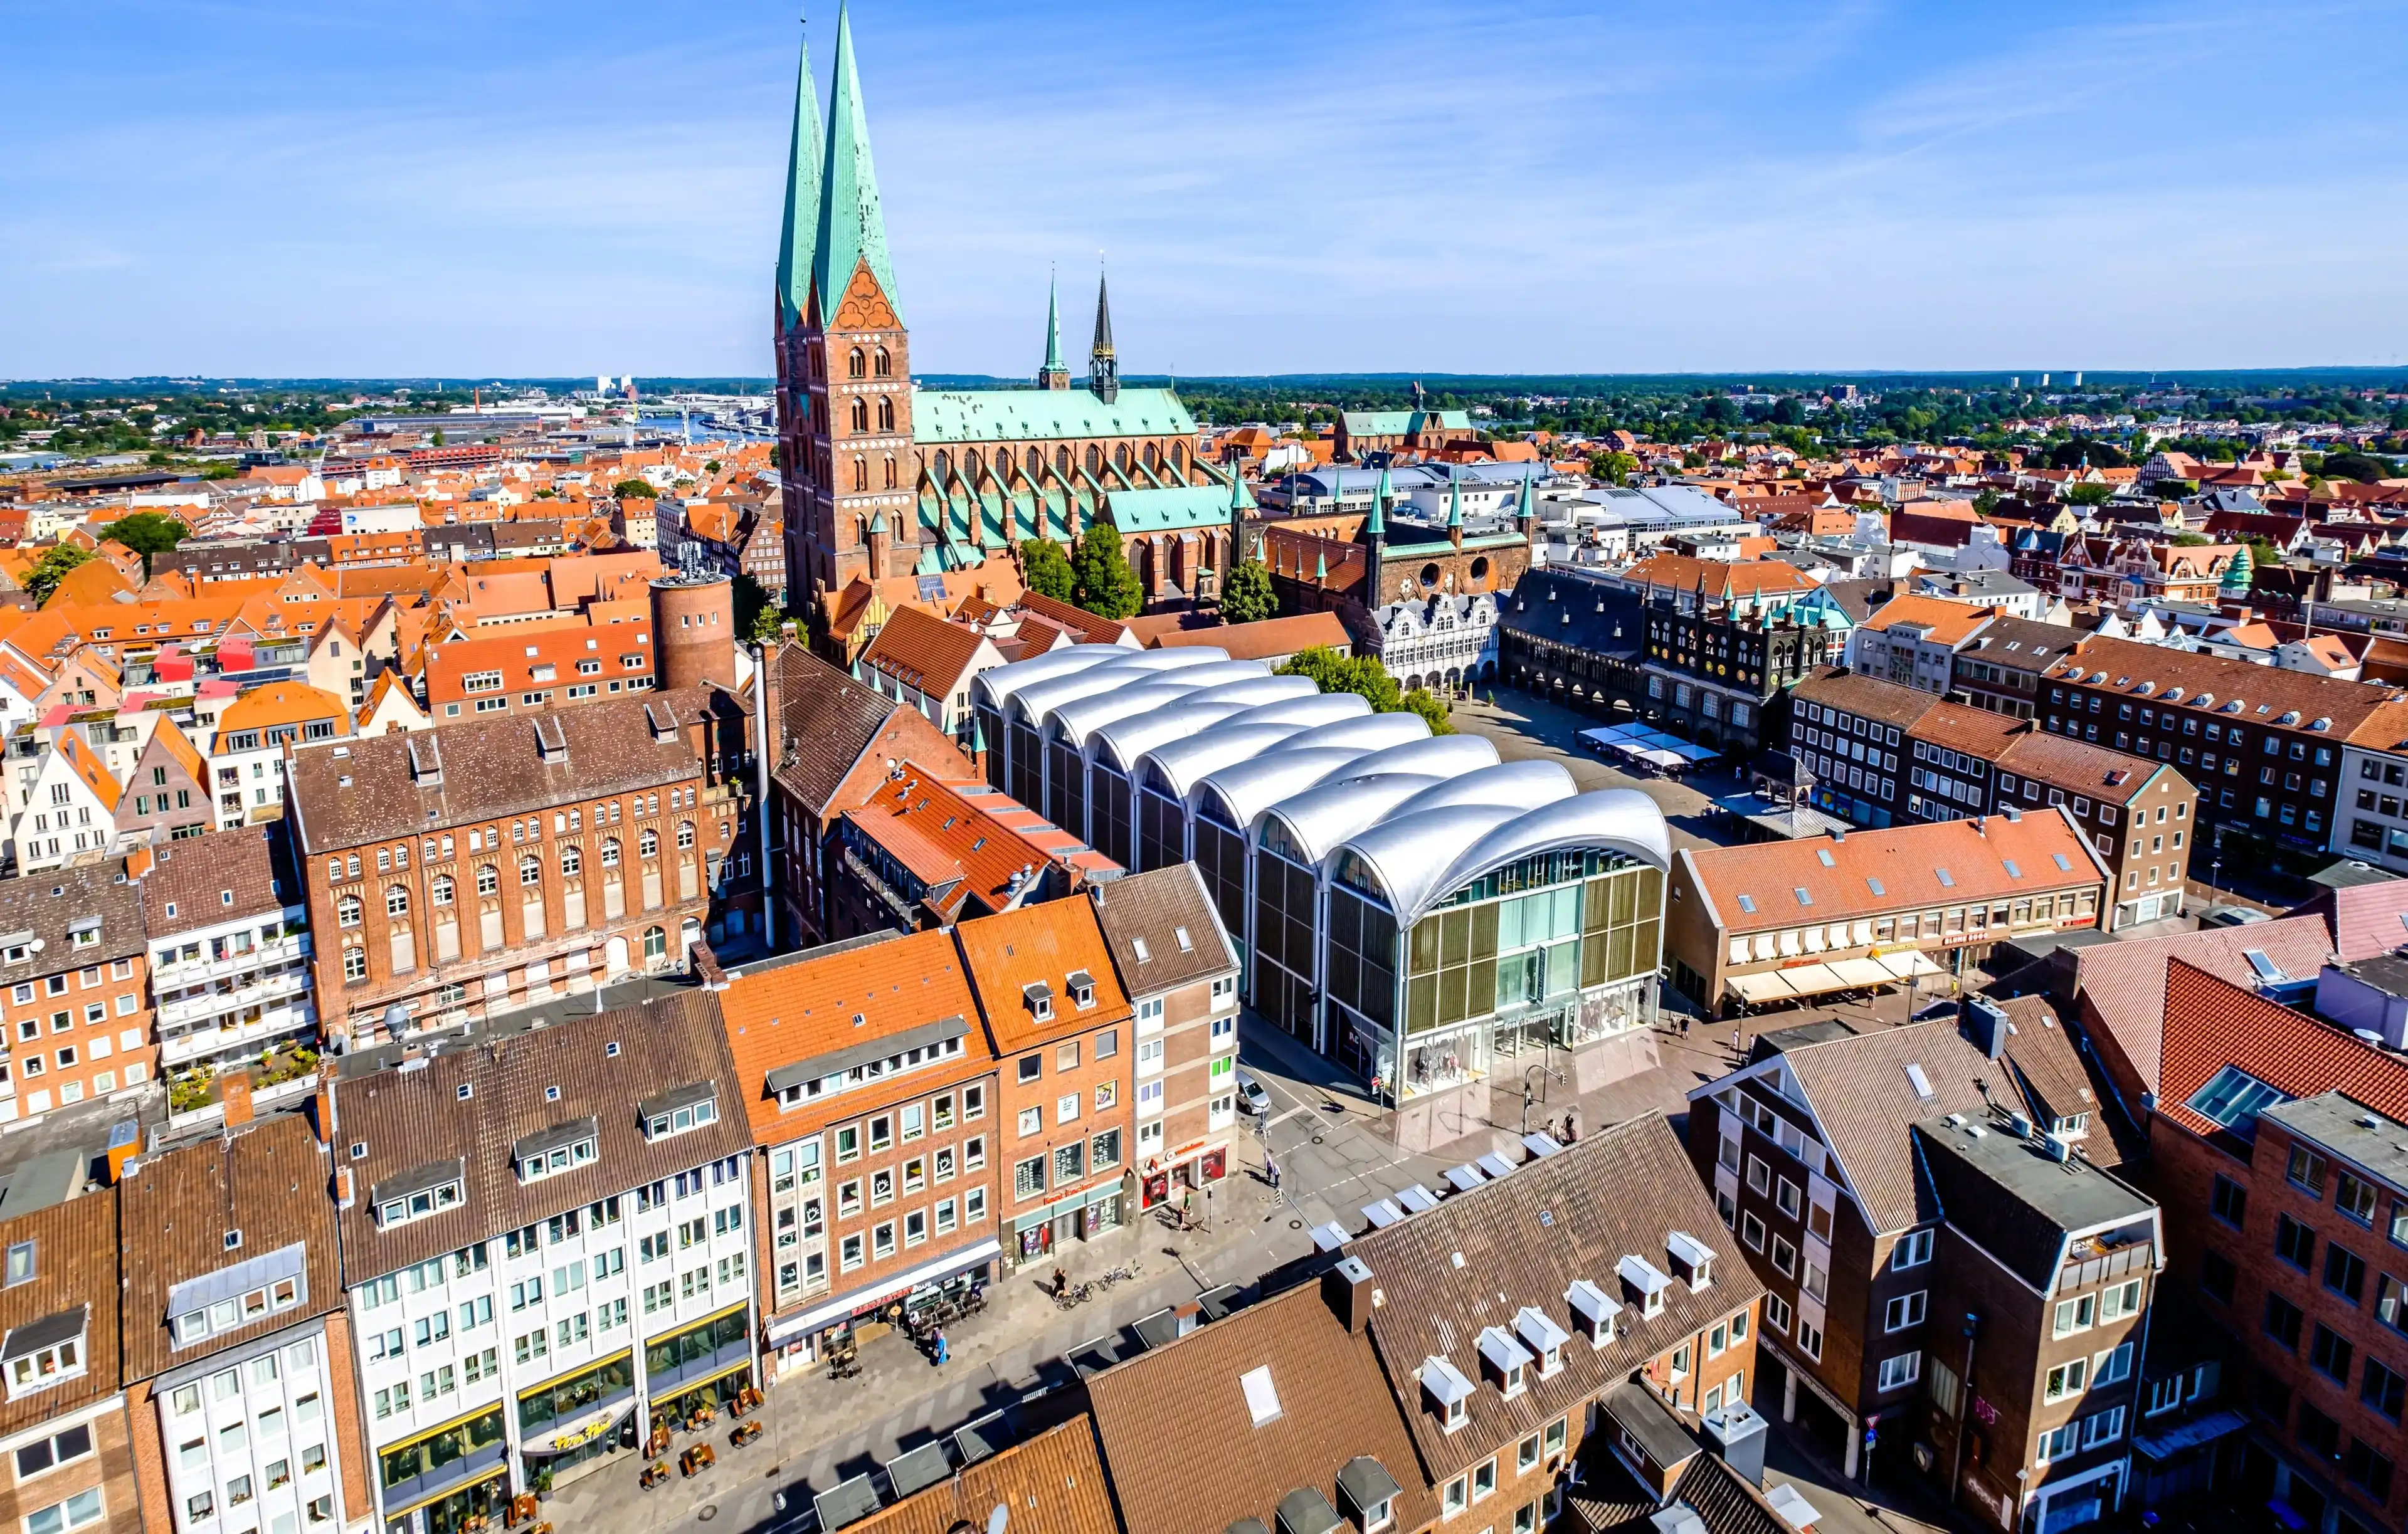 Best Lübeck hotels. Cheap hotels in Lübeck, Germany